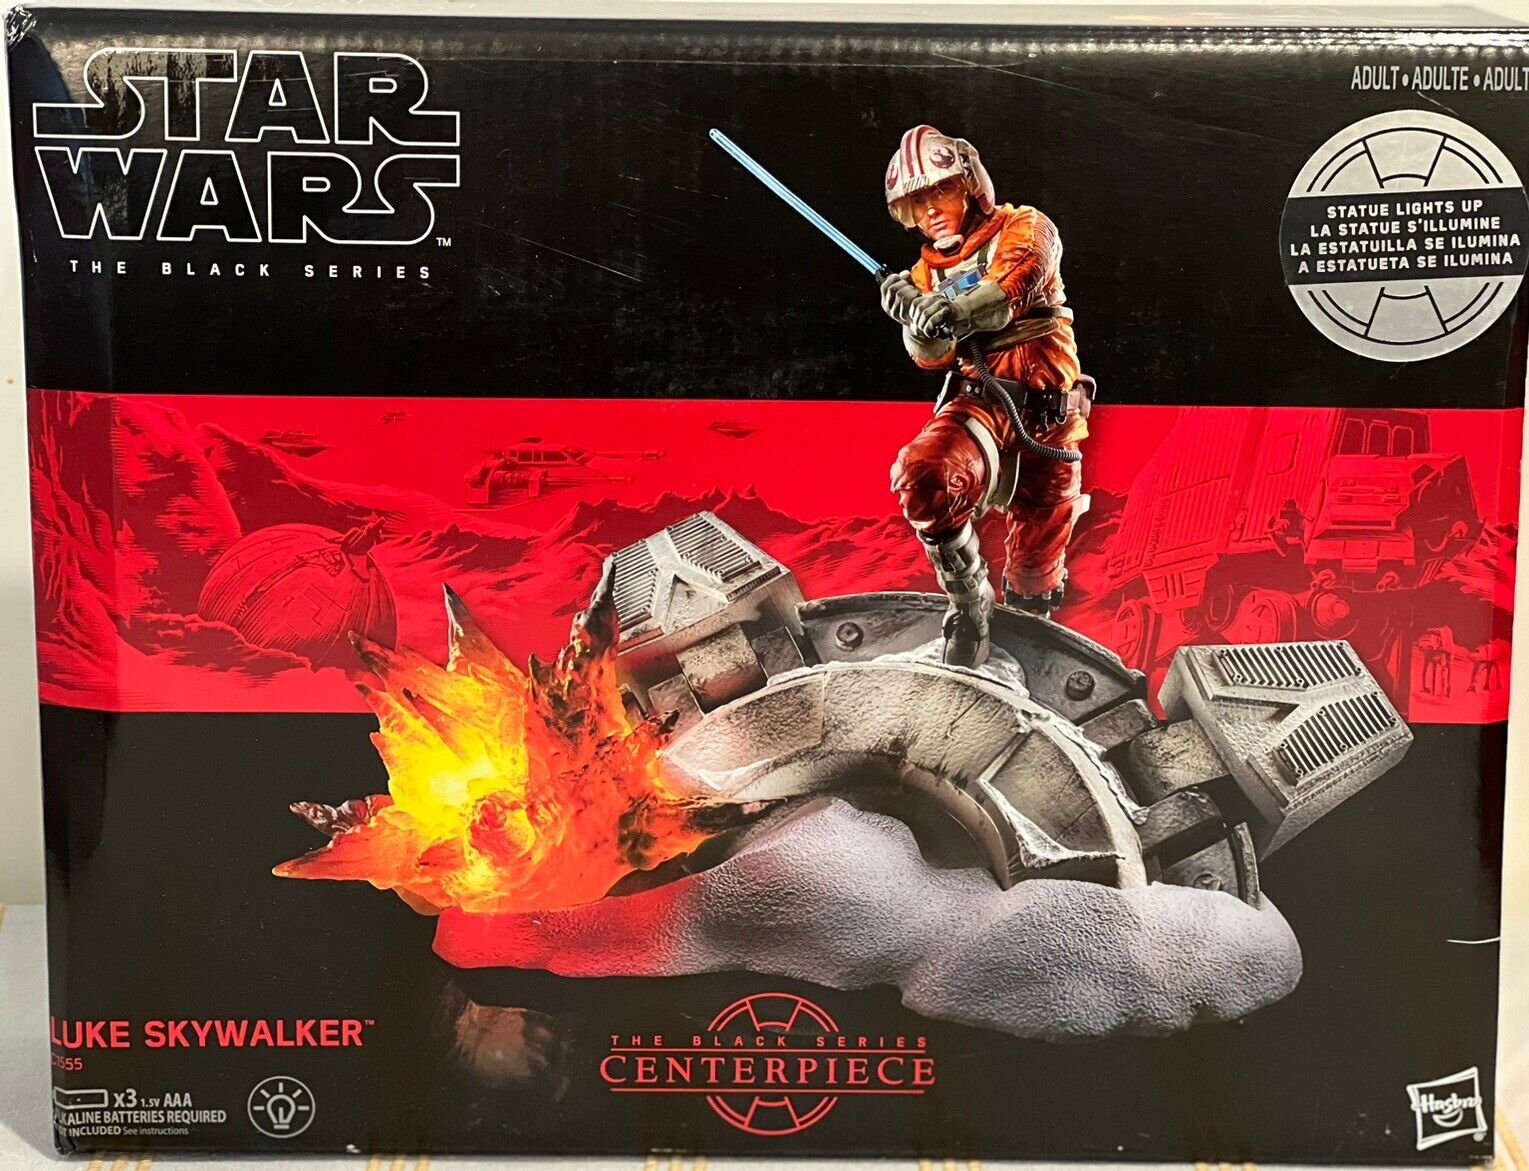 Hasbro Star Wars The Black Series Centerpiece Luke Skywalker Action Figure